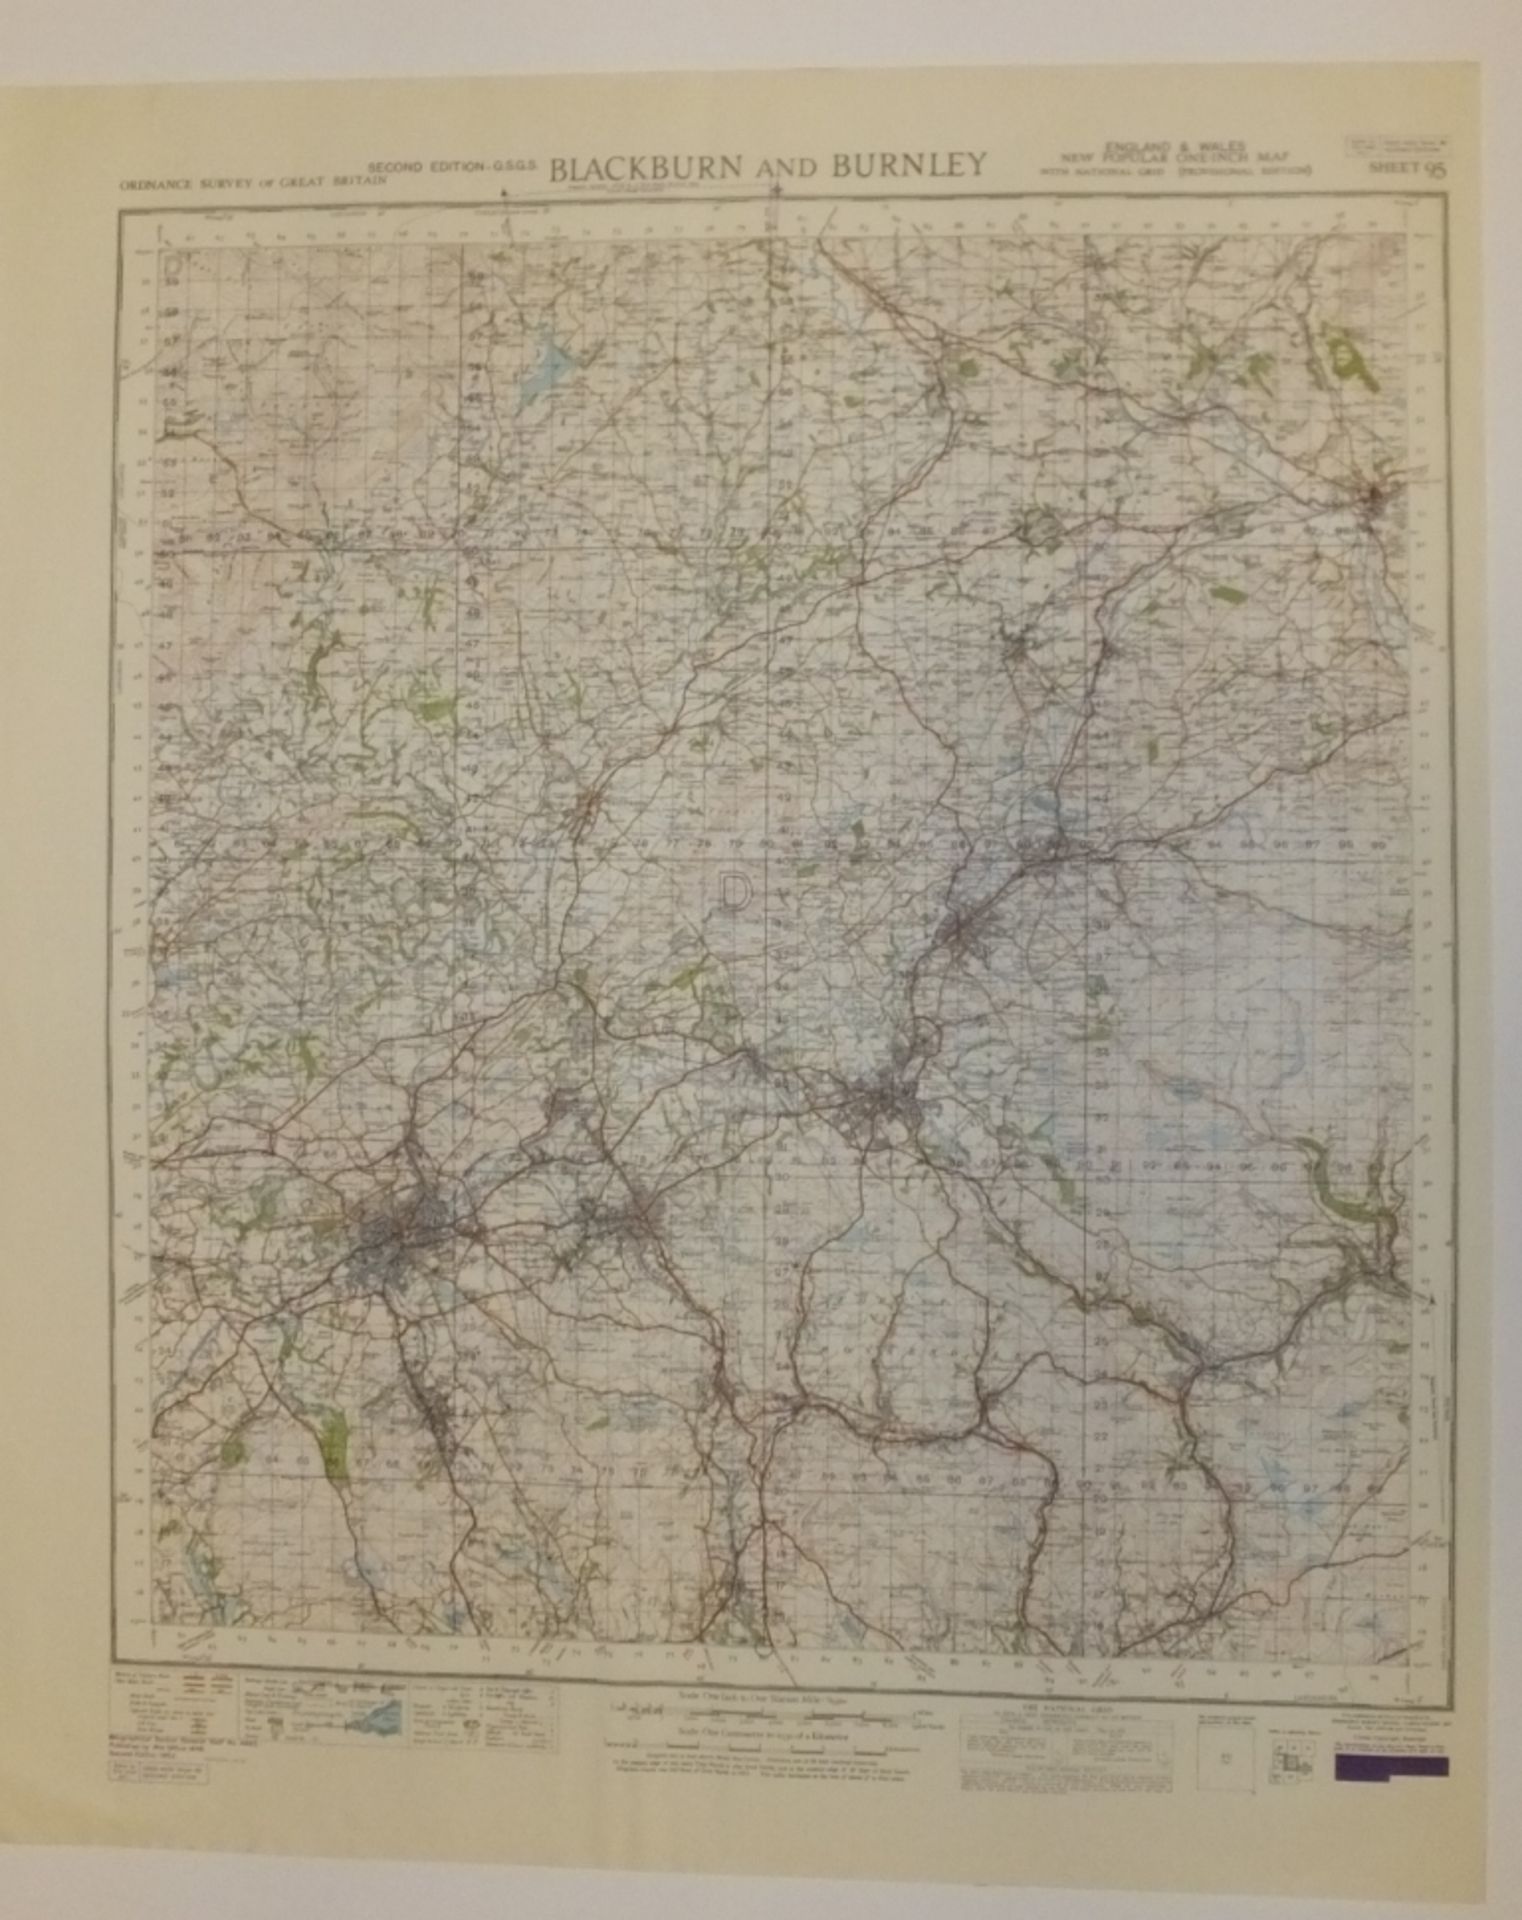 26x ENGLAND & WALES MAP BLACKBURN BURNLEY 1INCH 1MILE 1952 2ND EDITION 4620GSGS SHEET 95